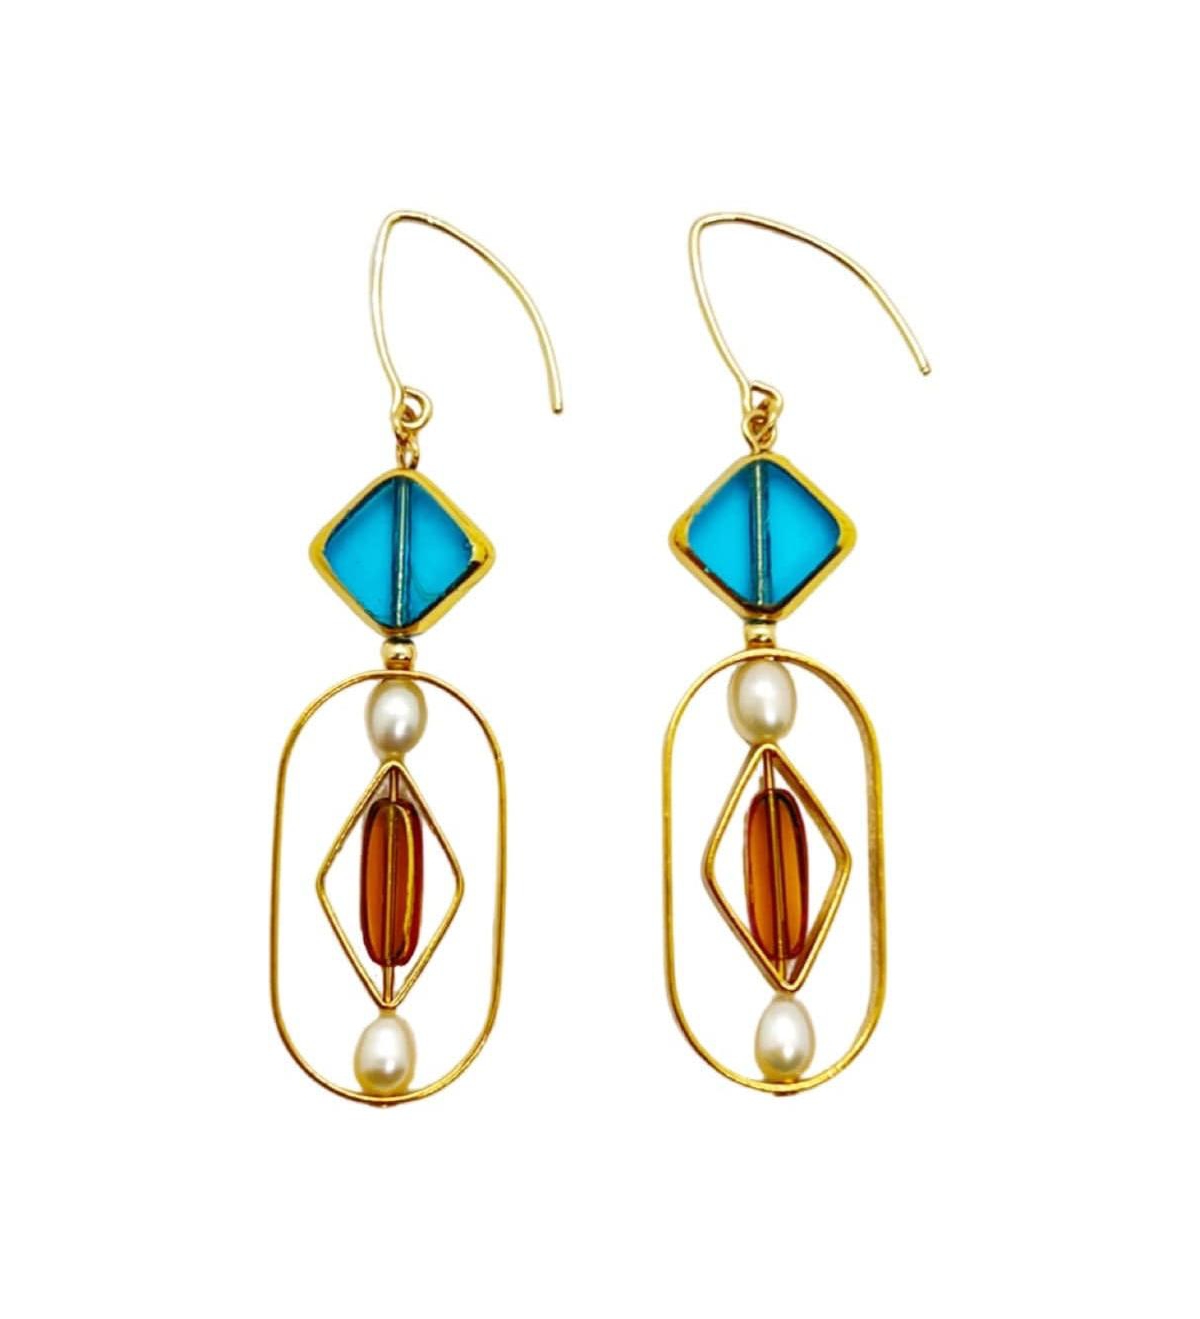 Art 2313E x Pearl Geometric Earrings - Blue, brown, white and gold